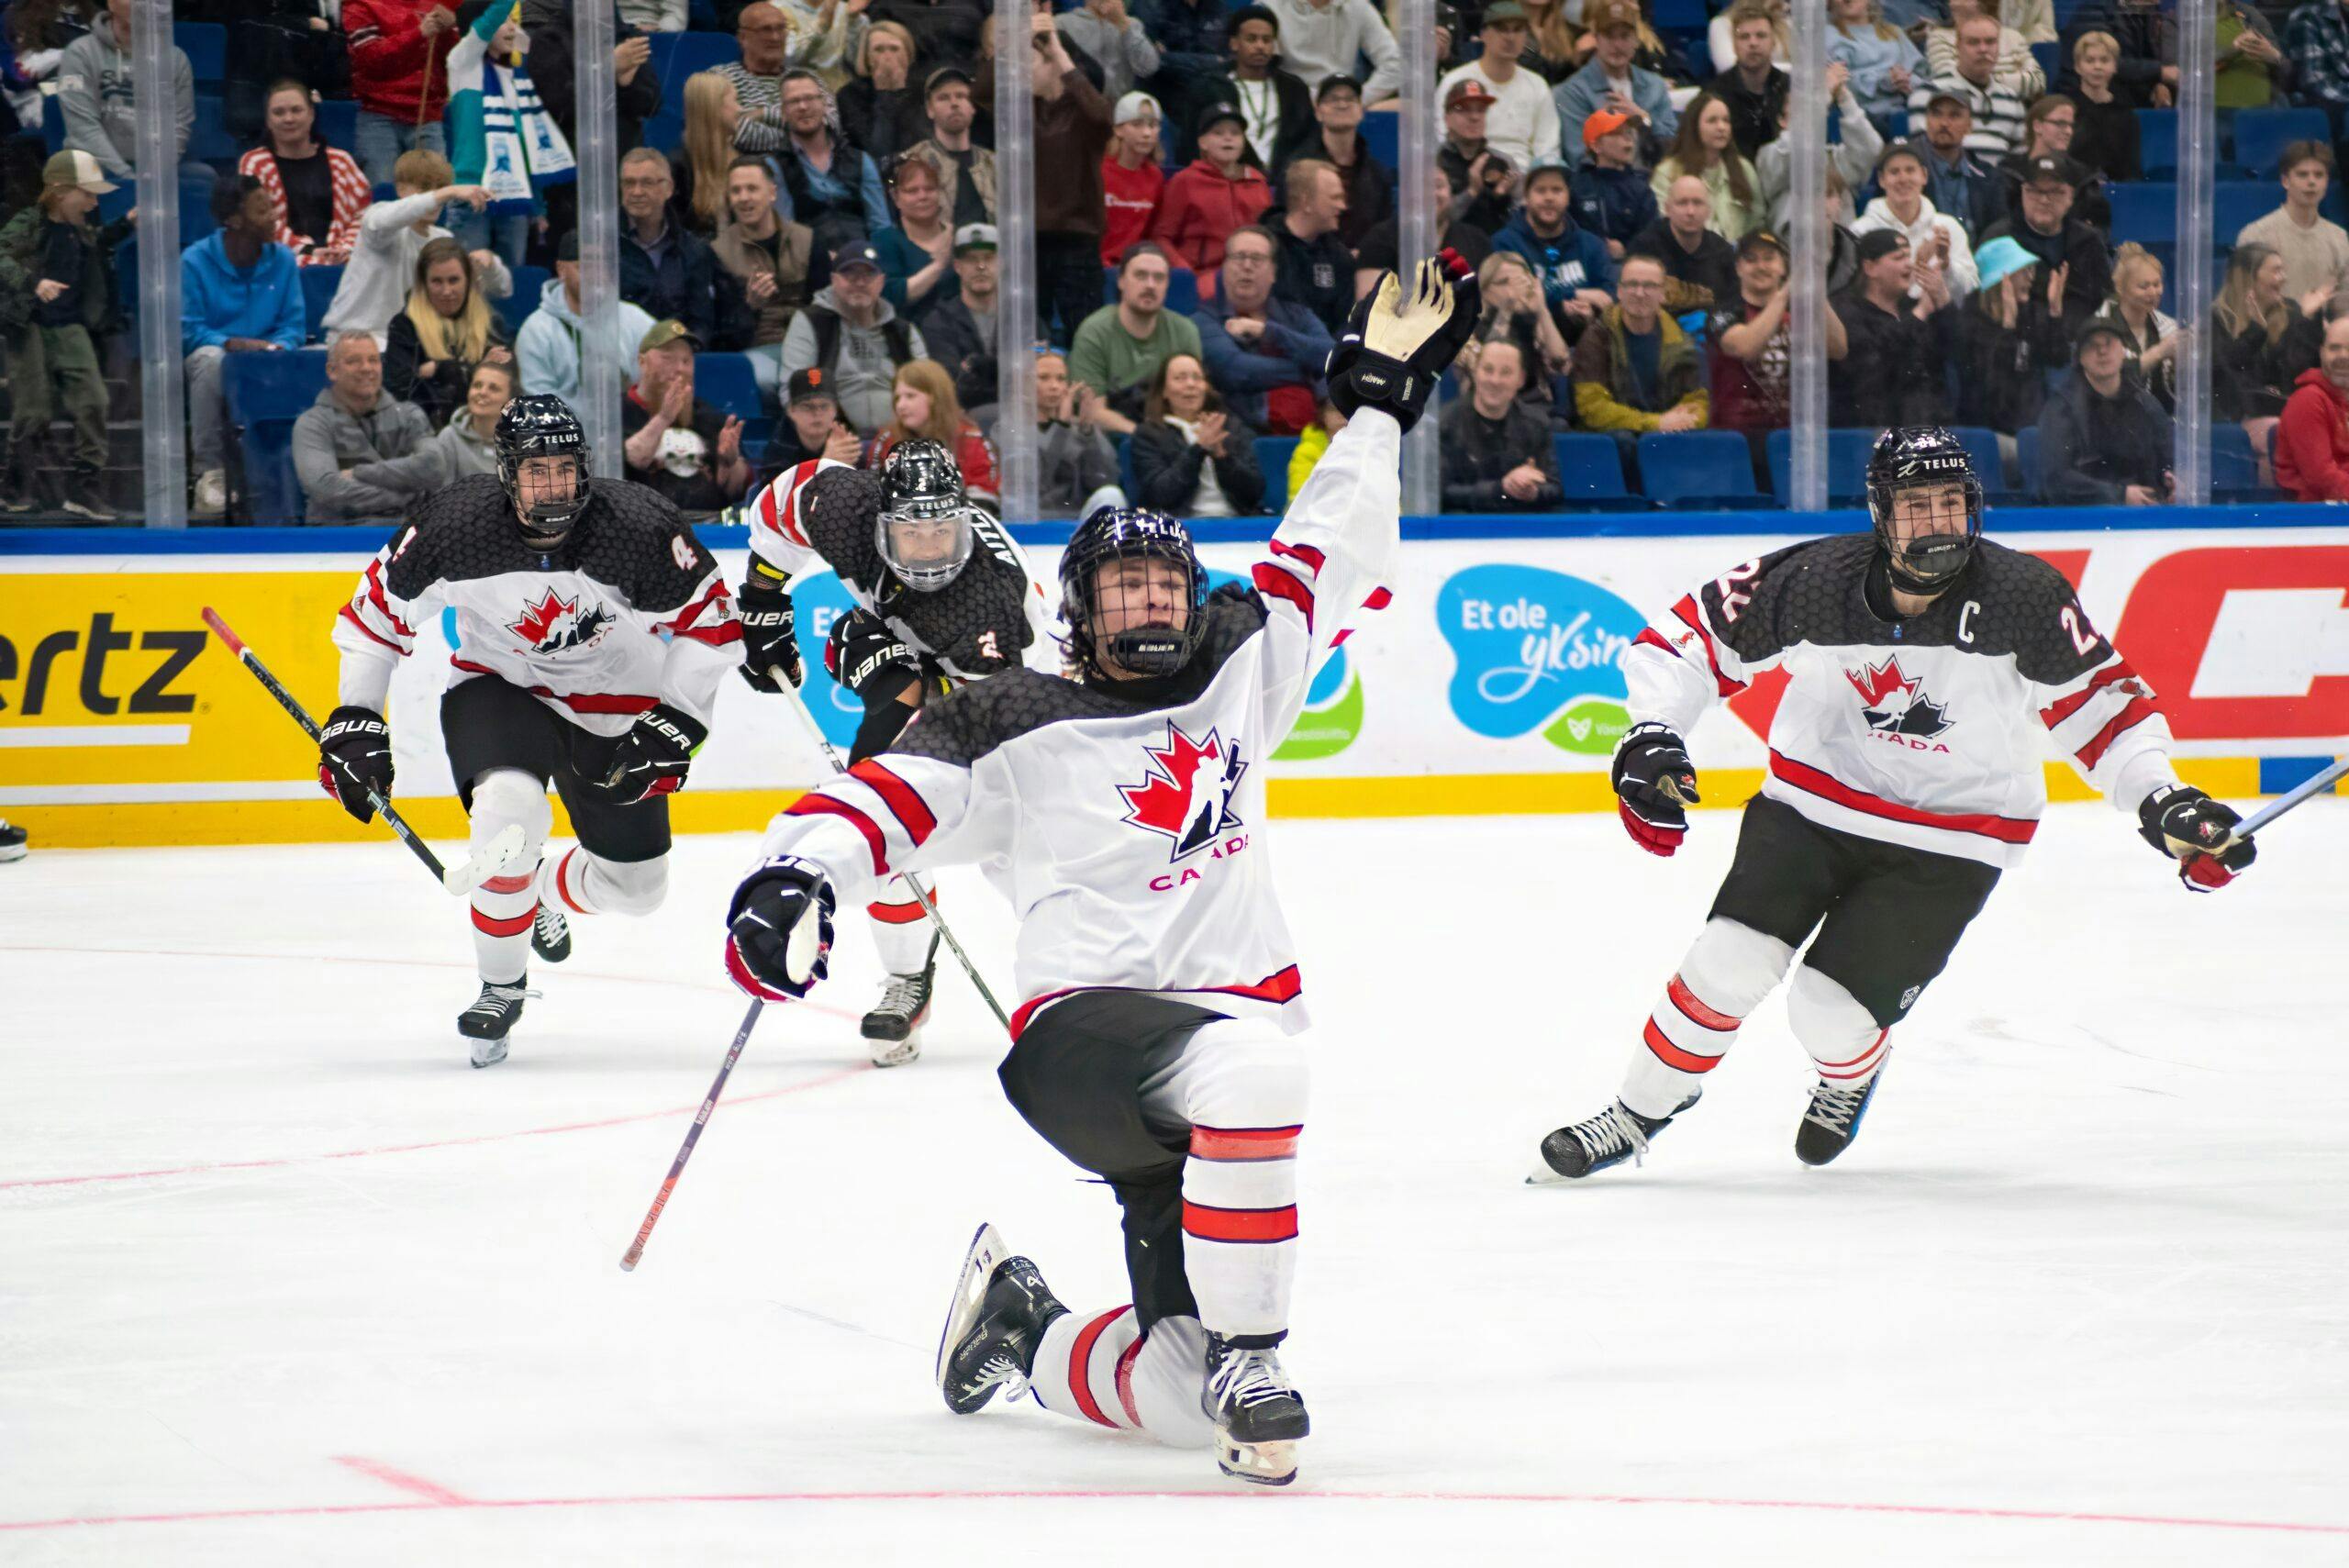 Gavin McKenna registers hat-trick as Canada beats USA for U-18 World Championship gold